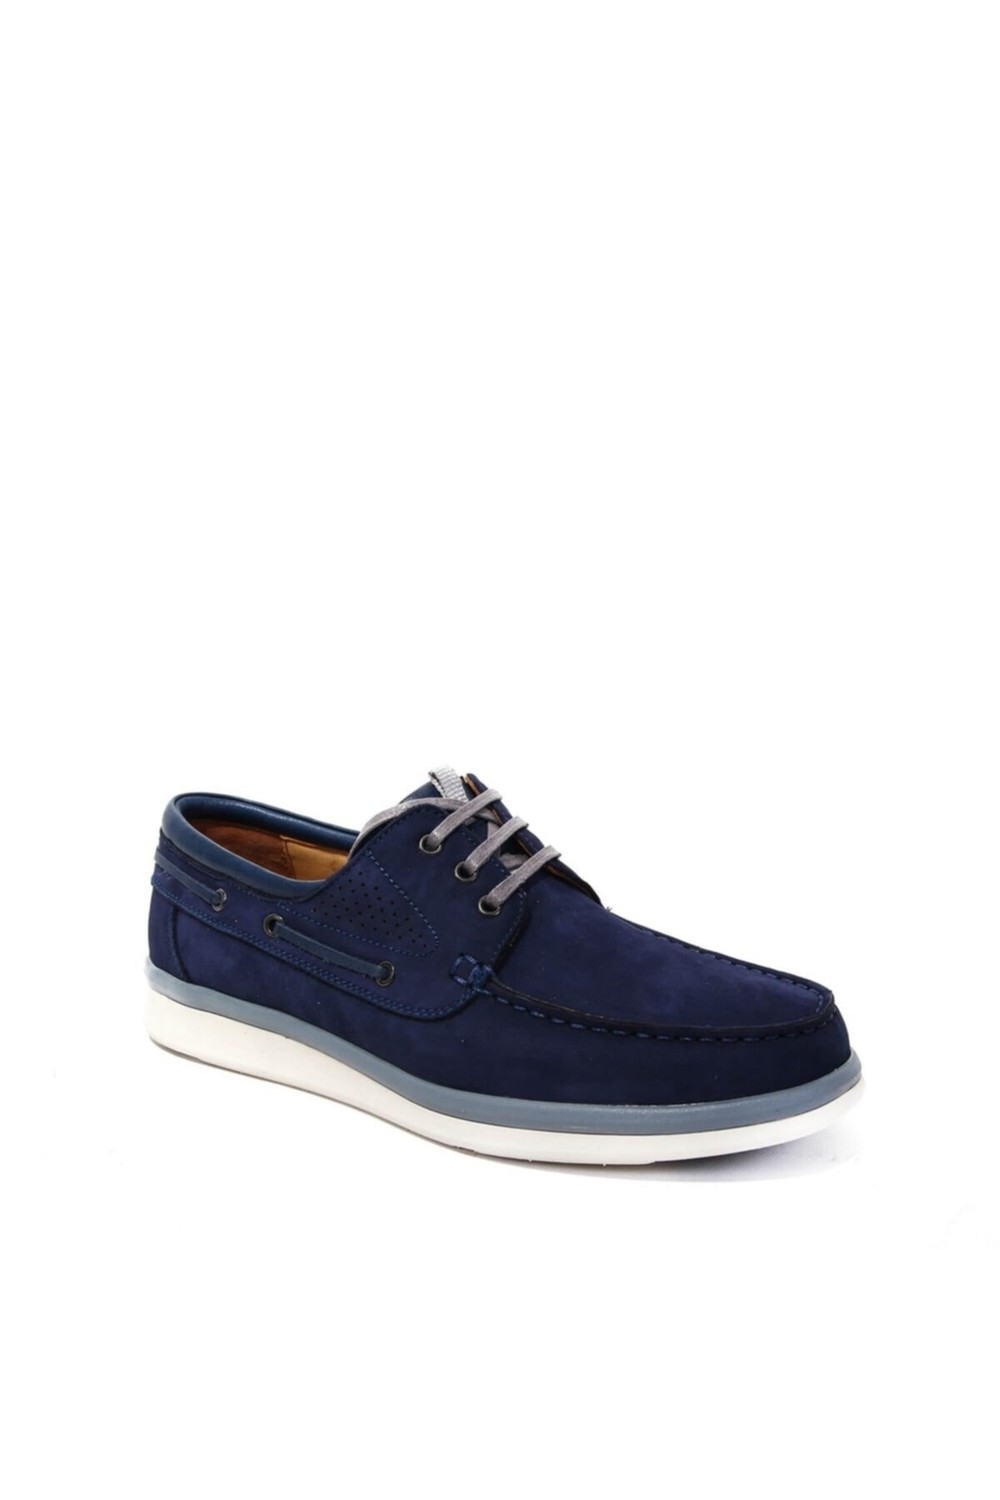 Forelli Loafer Shoes - Dark blue - Flat